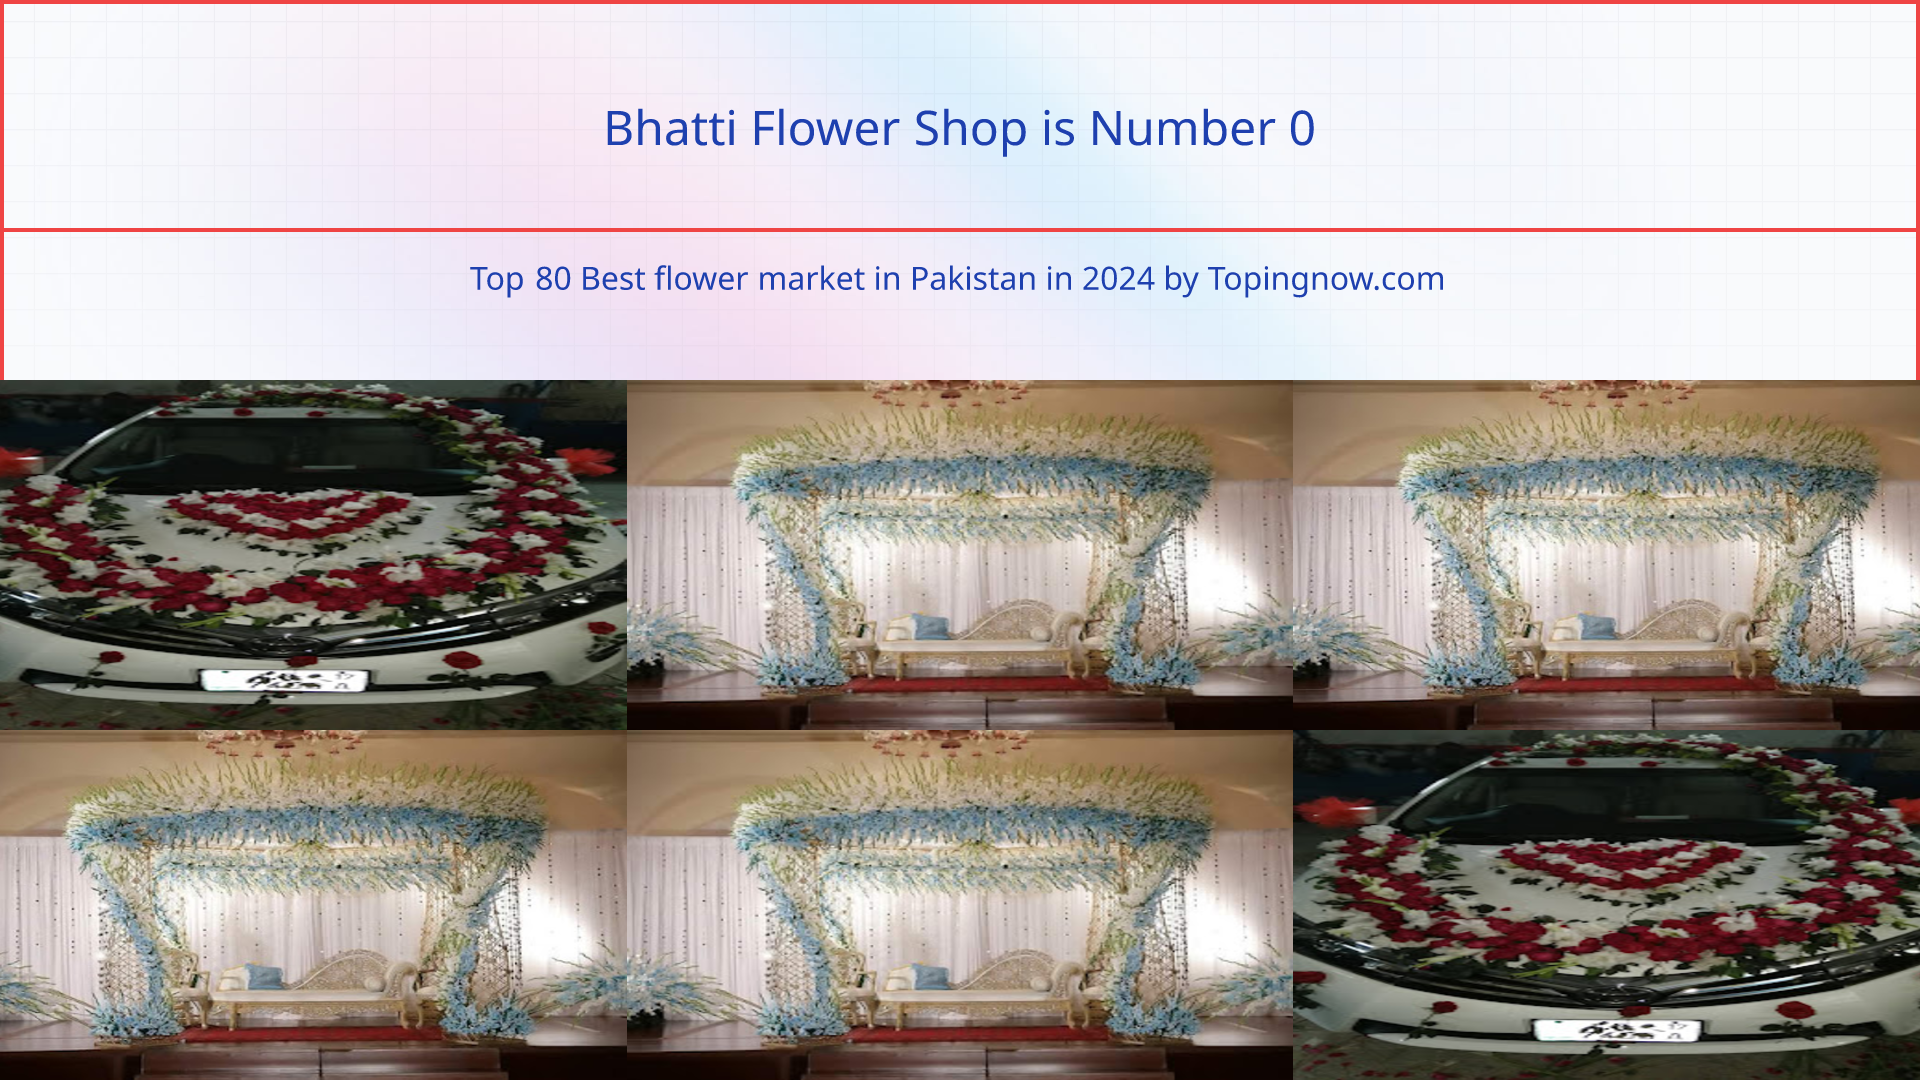 Bhatti Flower Shop: Top 80 Best flower market in Pakistan in 2024